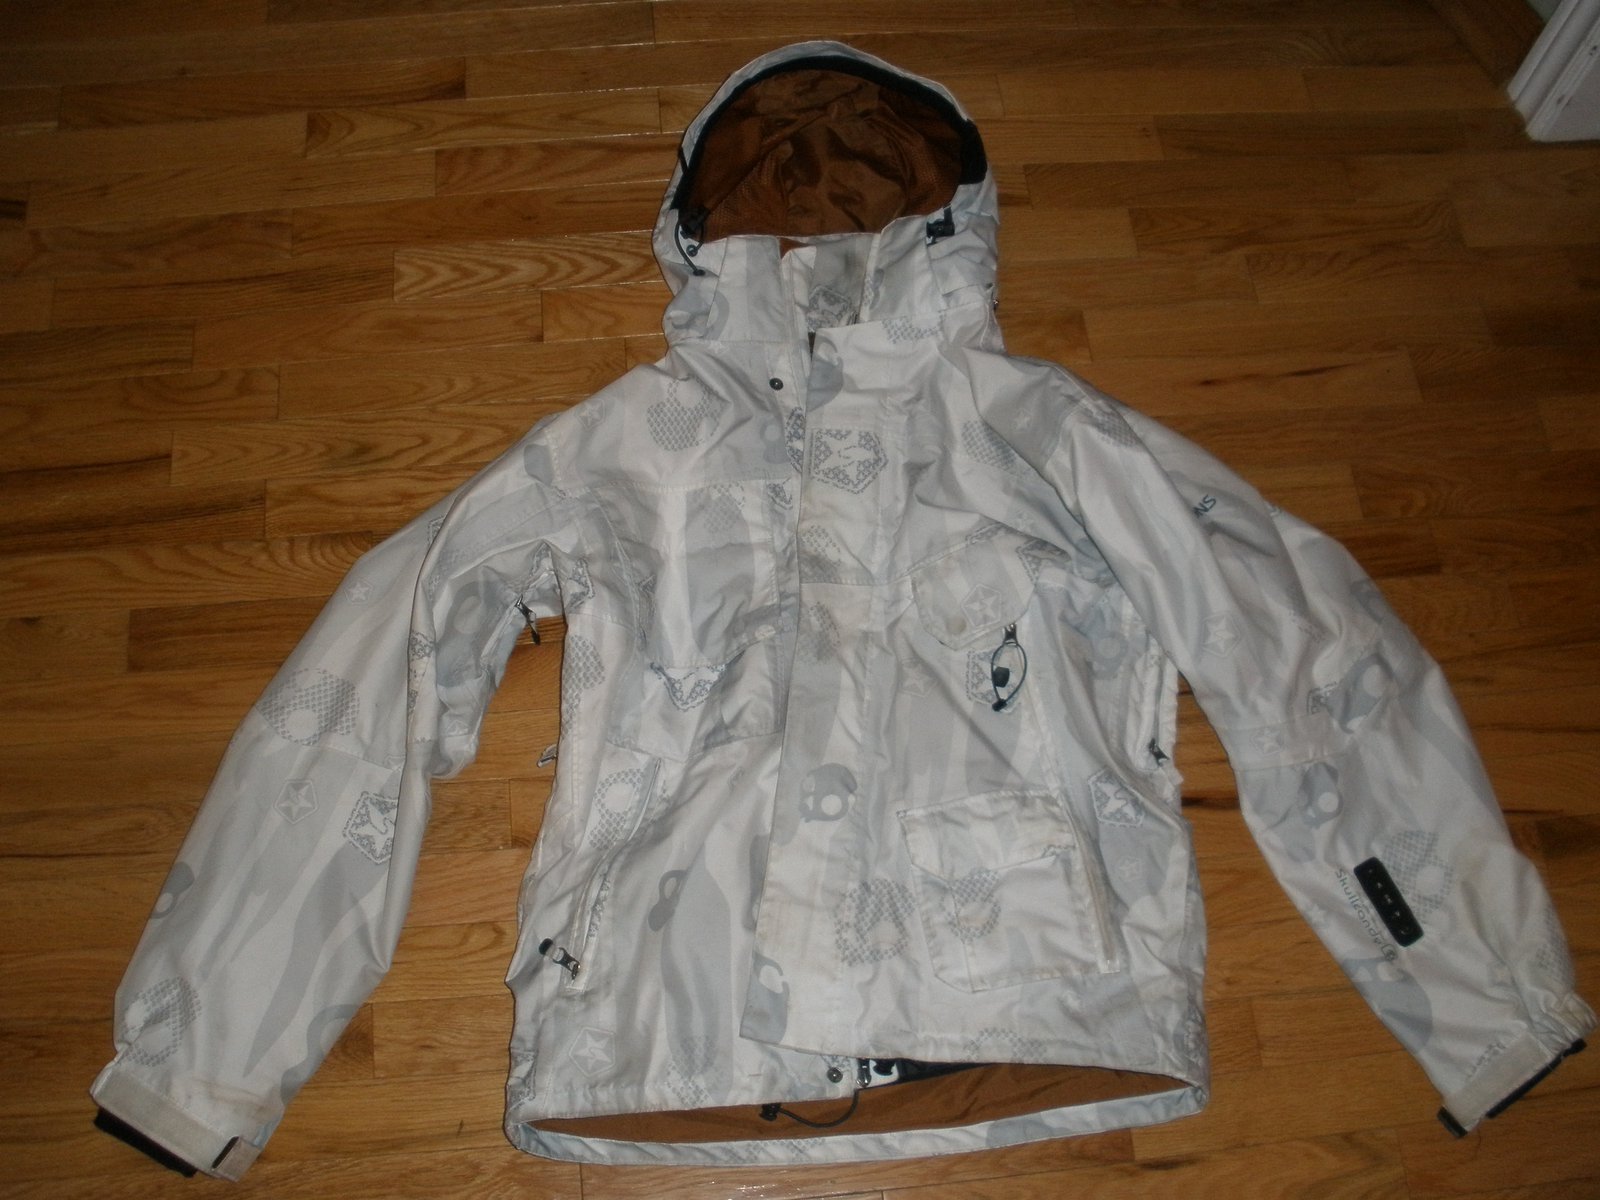 Sessions skullcandy jacket (120)